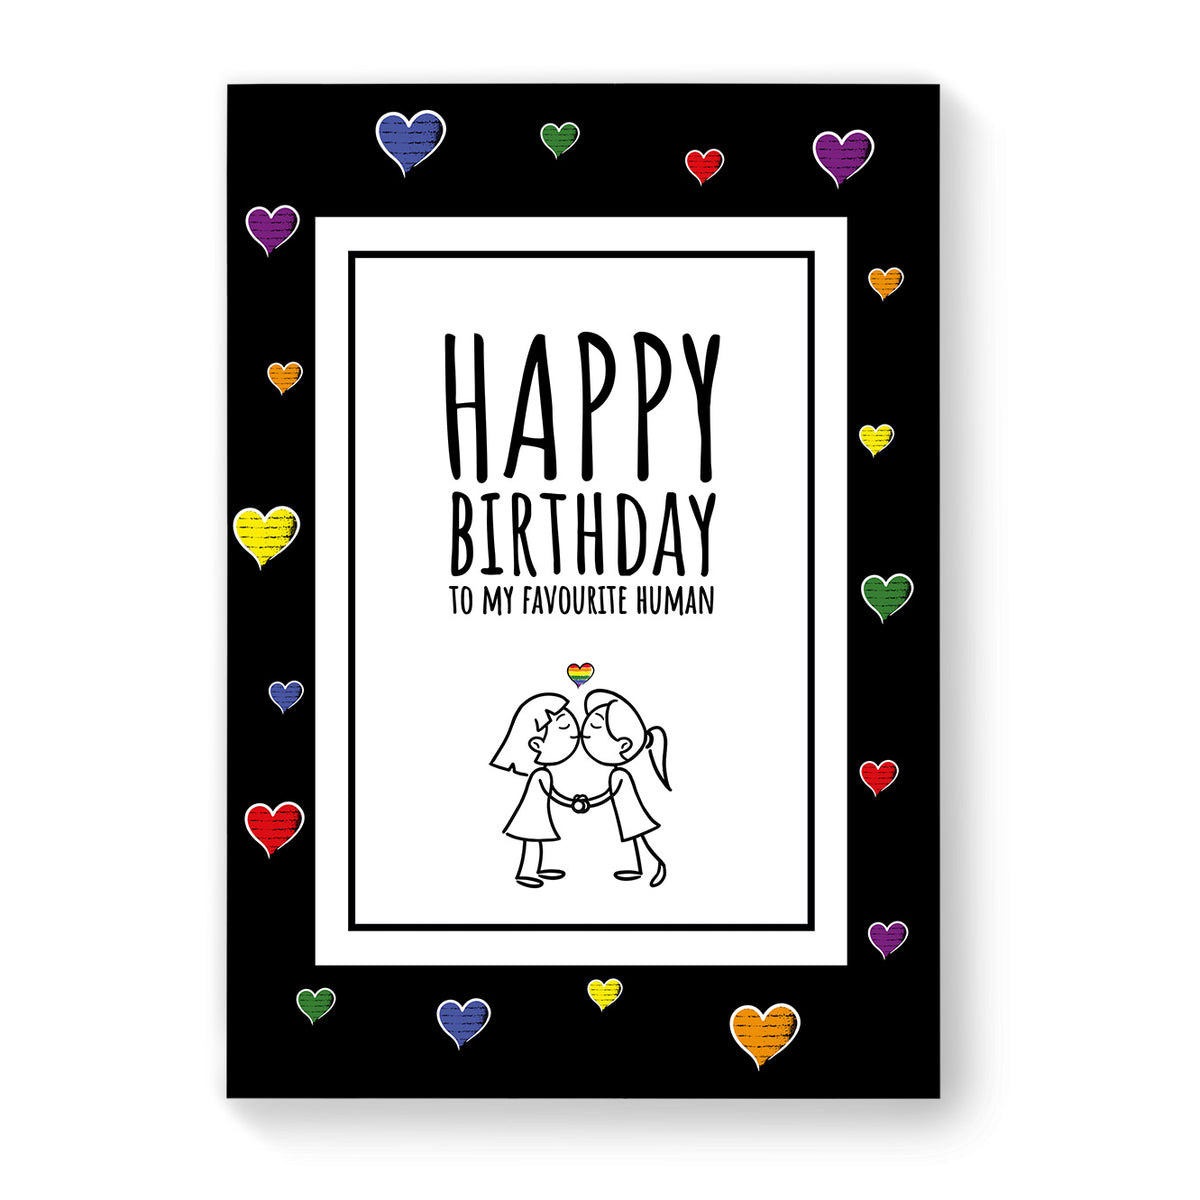 Happy Birthday to my favourite human - Lesbian Gay Birthday Card - Black Heart | Gift